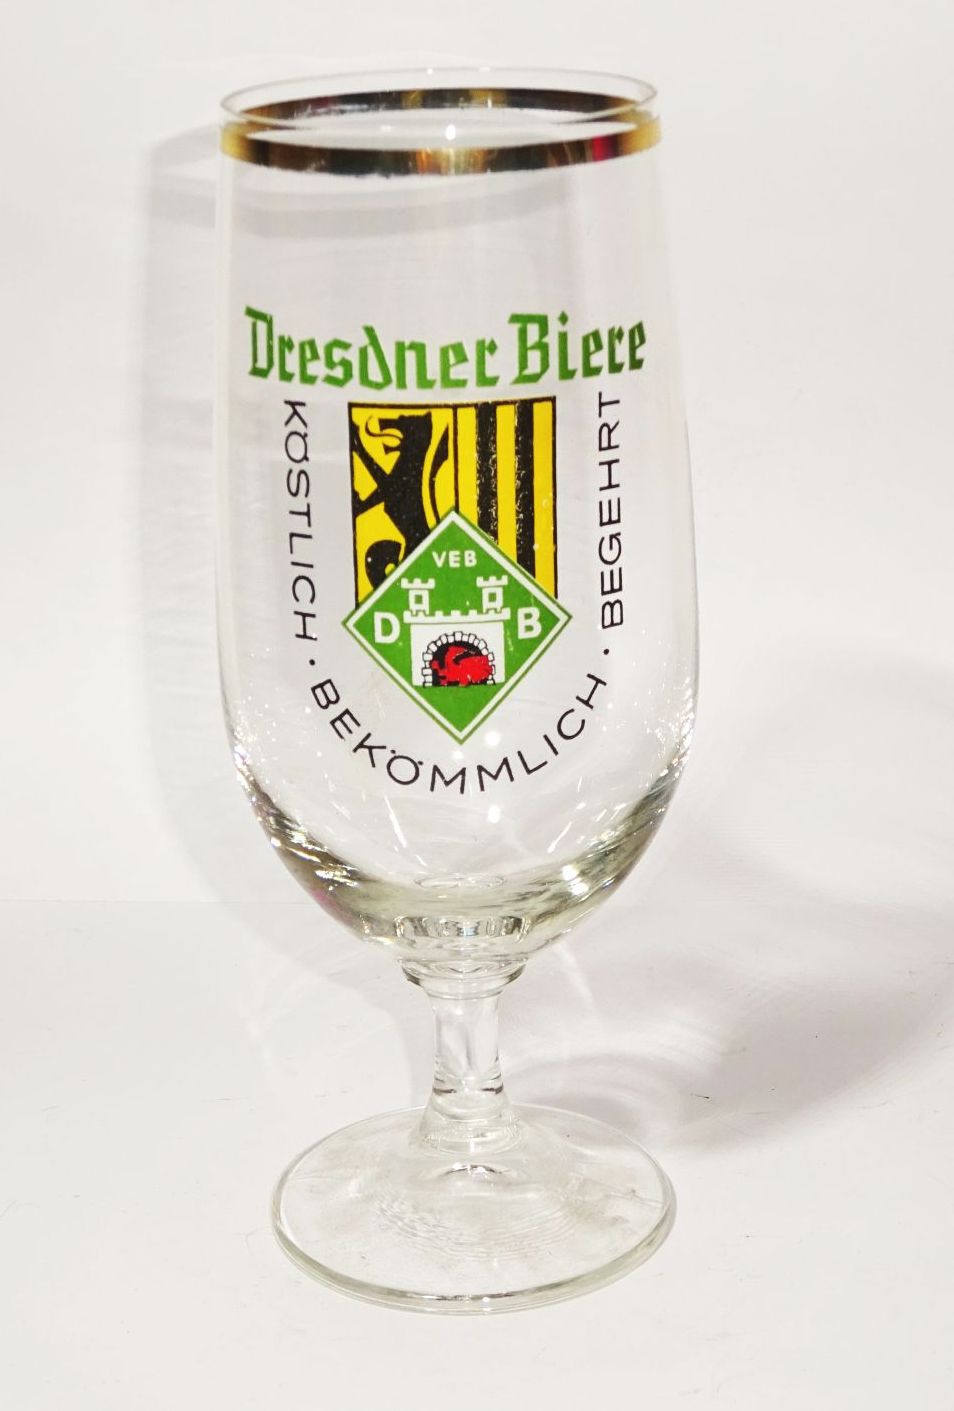 DDR Bierglas Dresdner Biere VEB Dresden